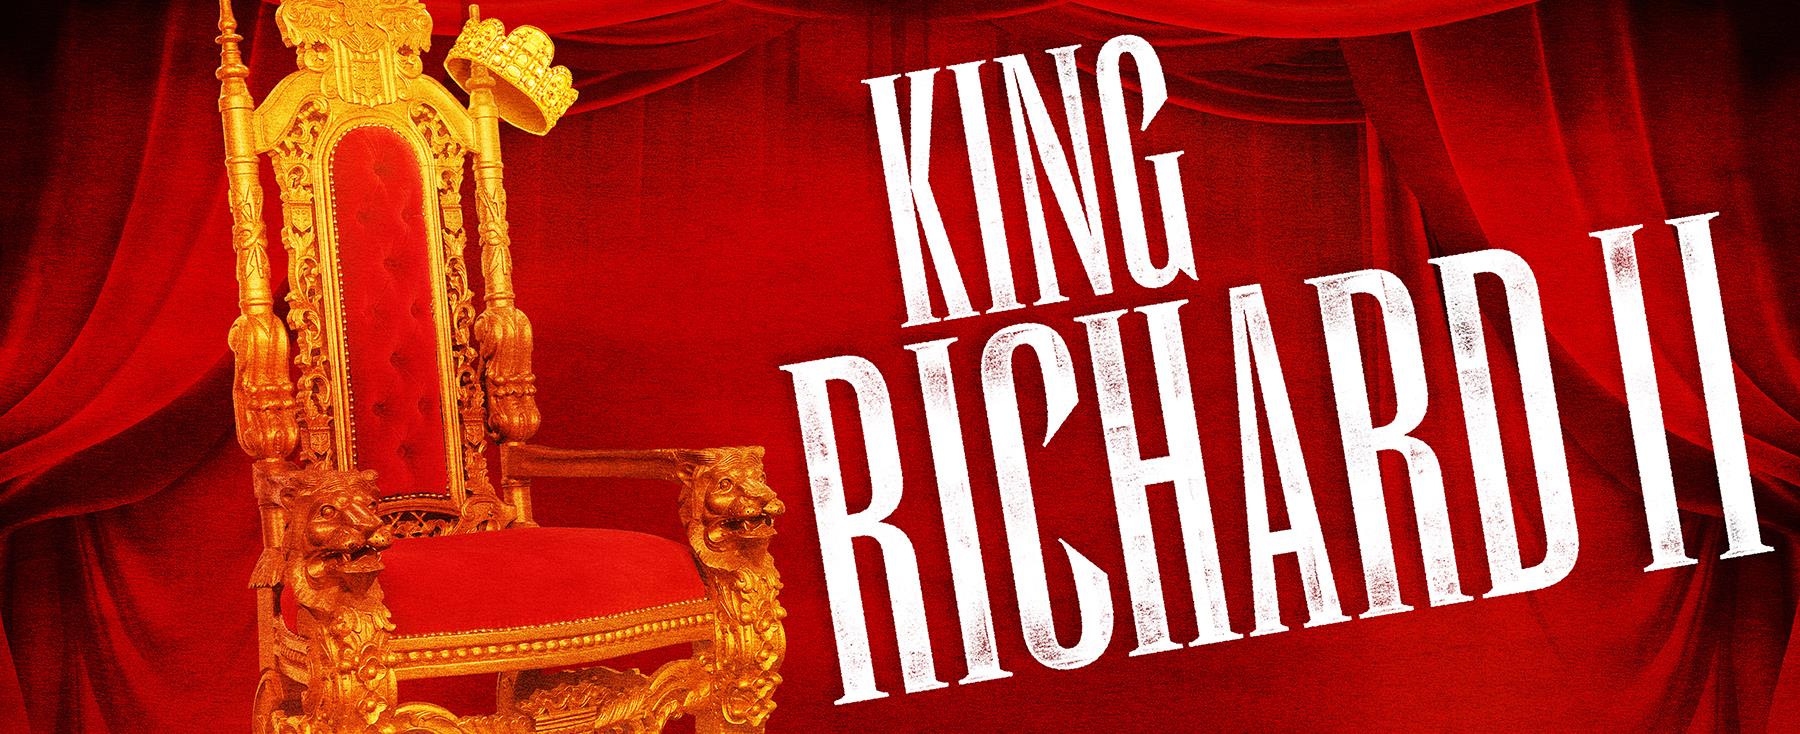 King Richard II - Top Things to Do in San Diego